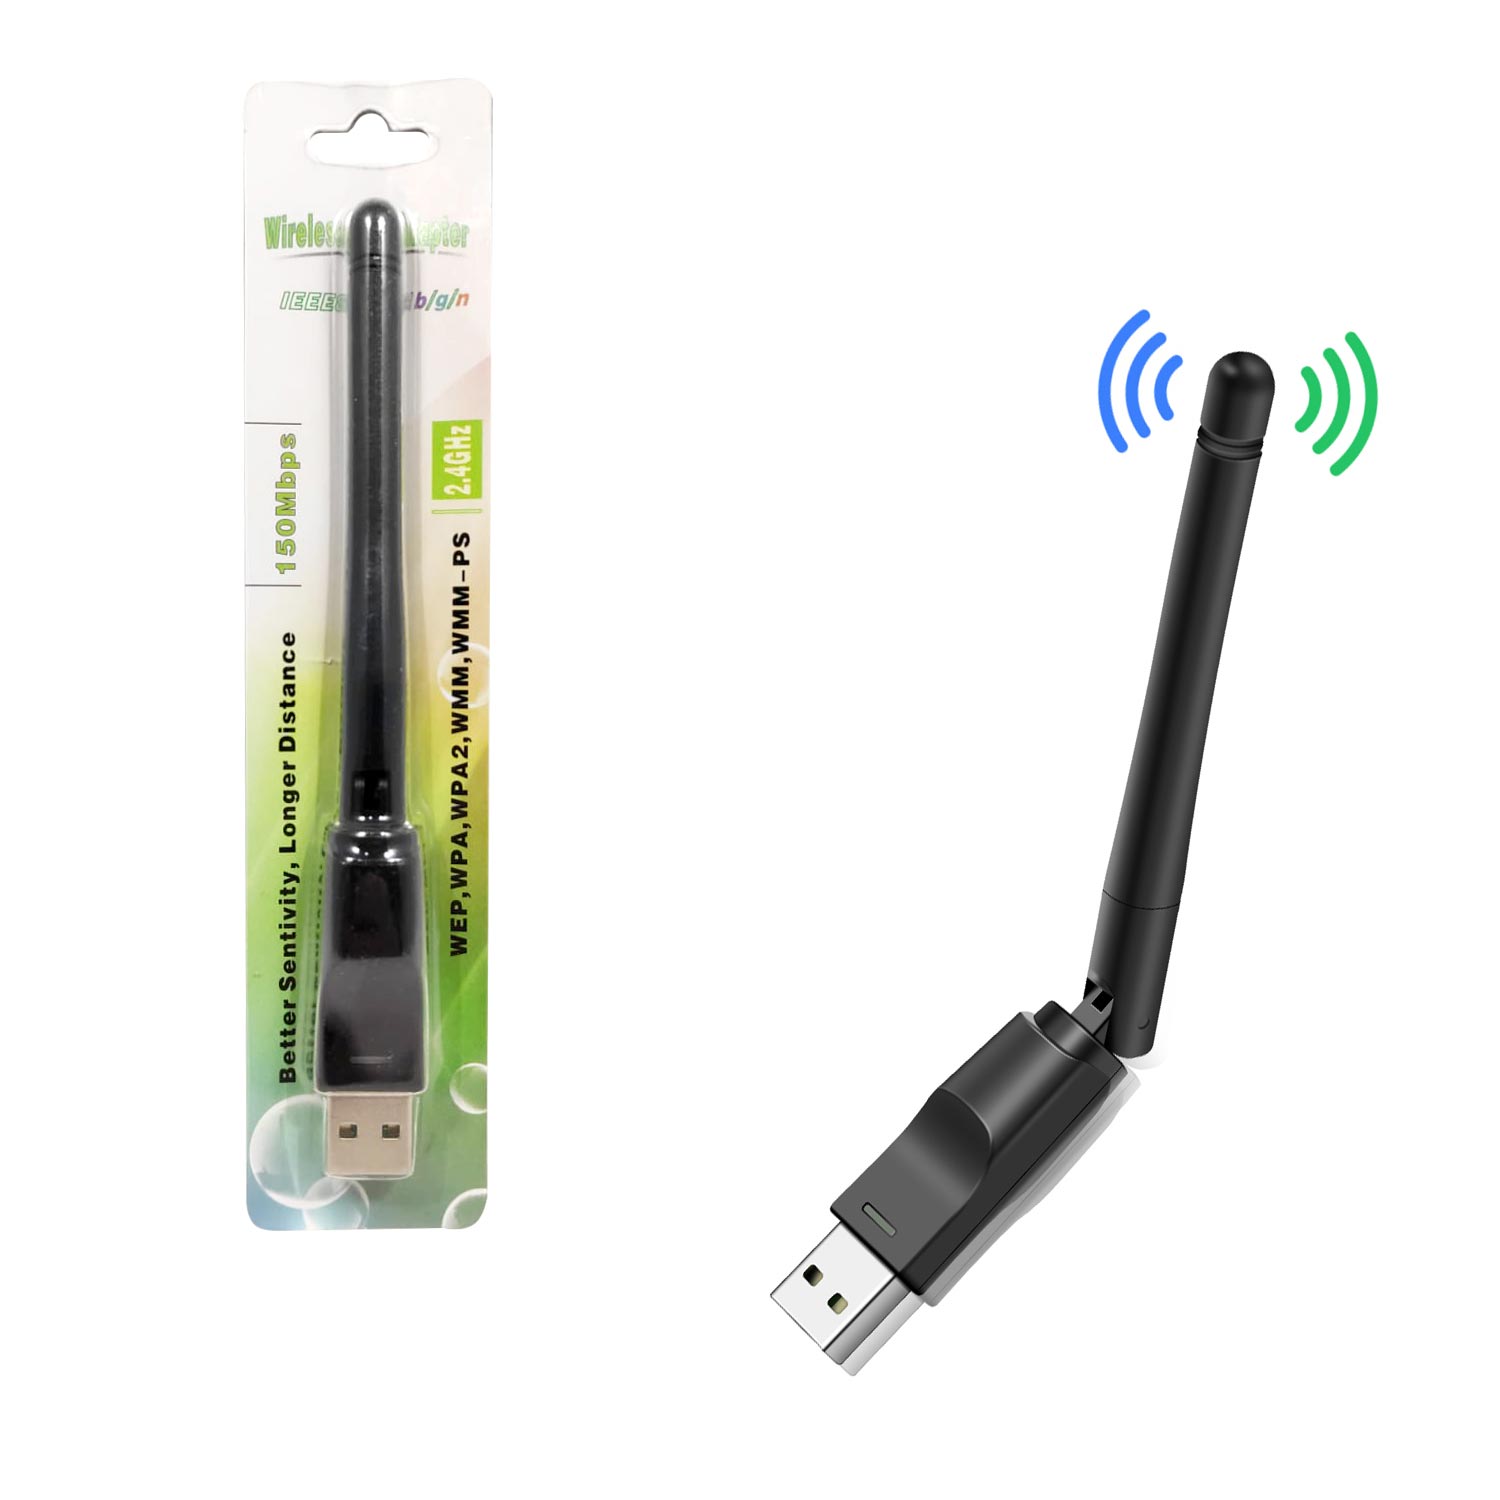 Polaxtor Wi-Fi Anten USB Ip Uydulara Uyumlu 7601 Chip